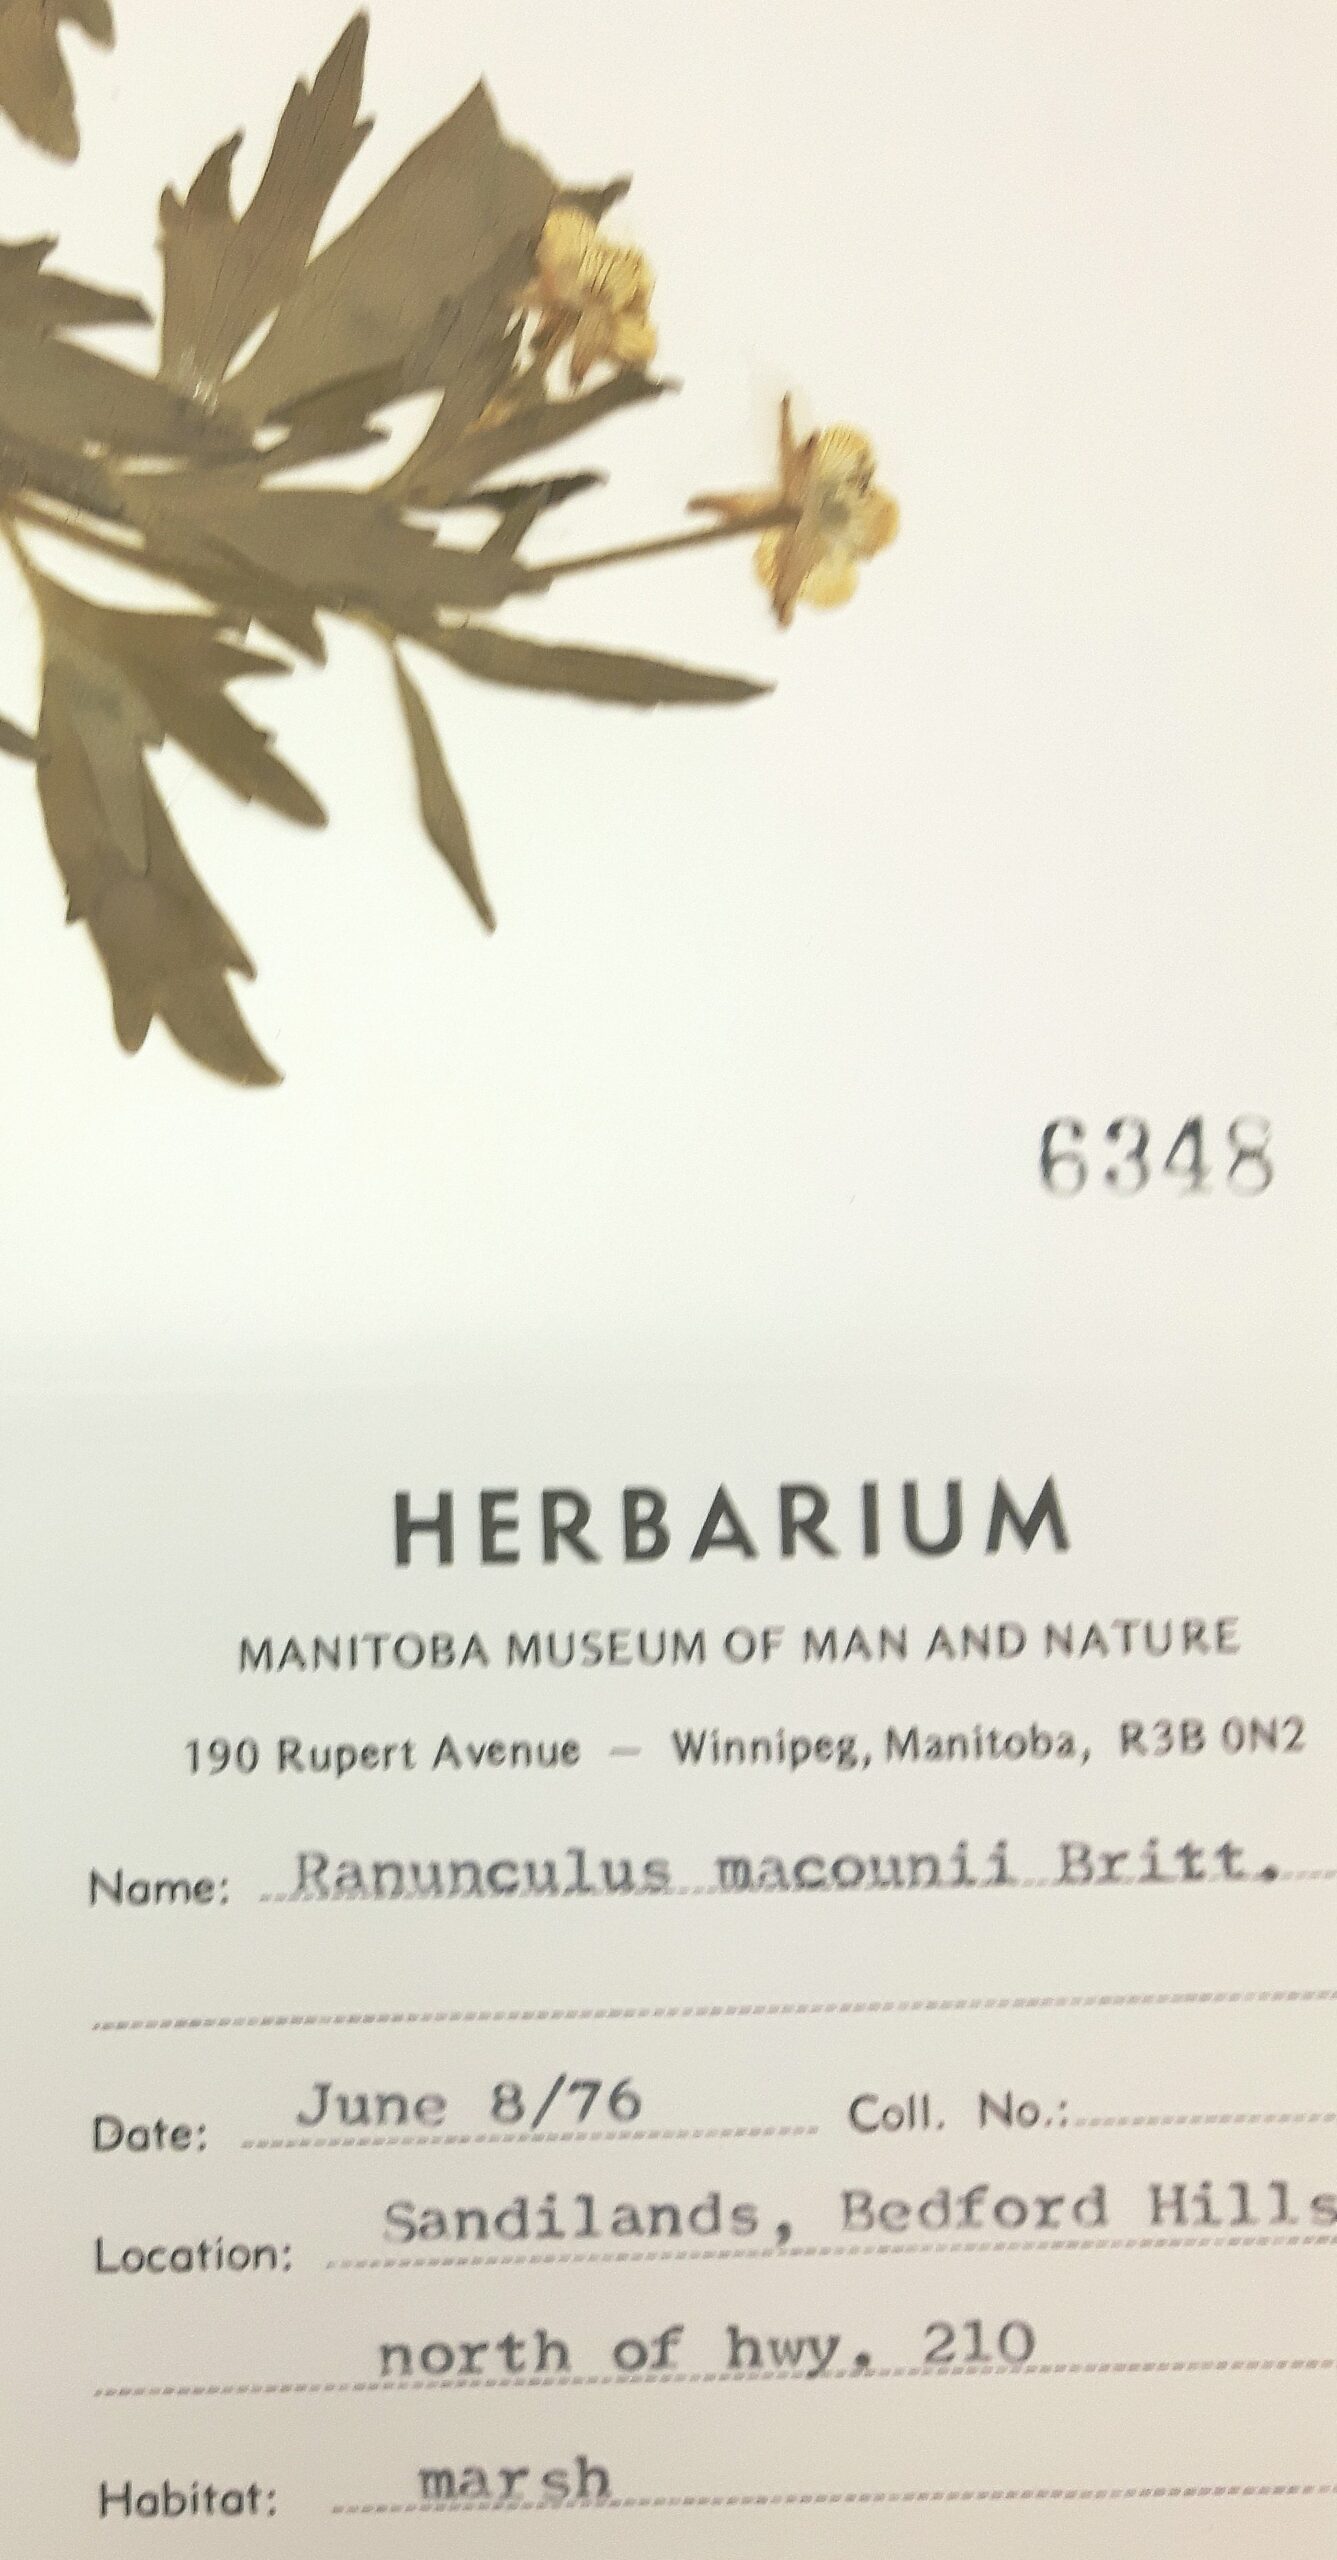 Close up on a Herbarium specimen catalogue entry with the specimen name Ranunculus macounii.